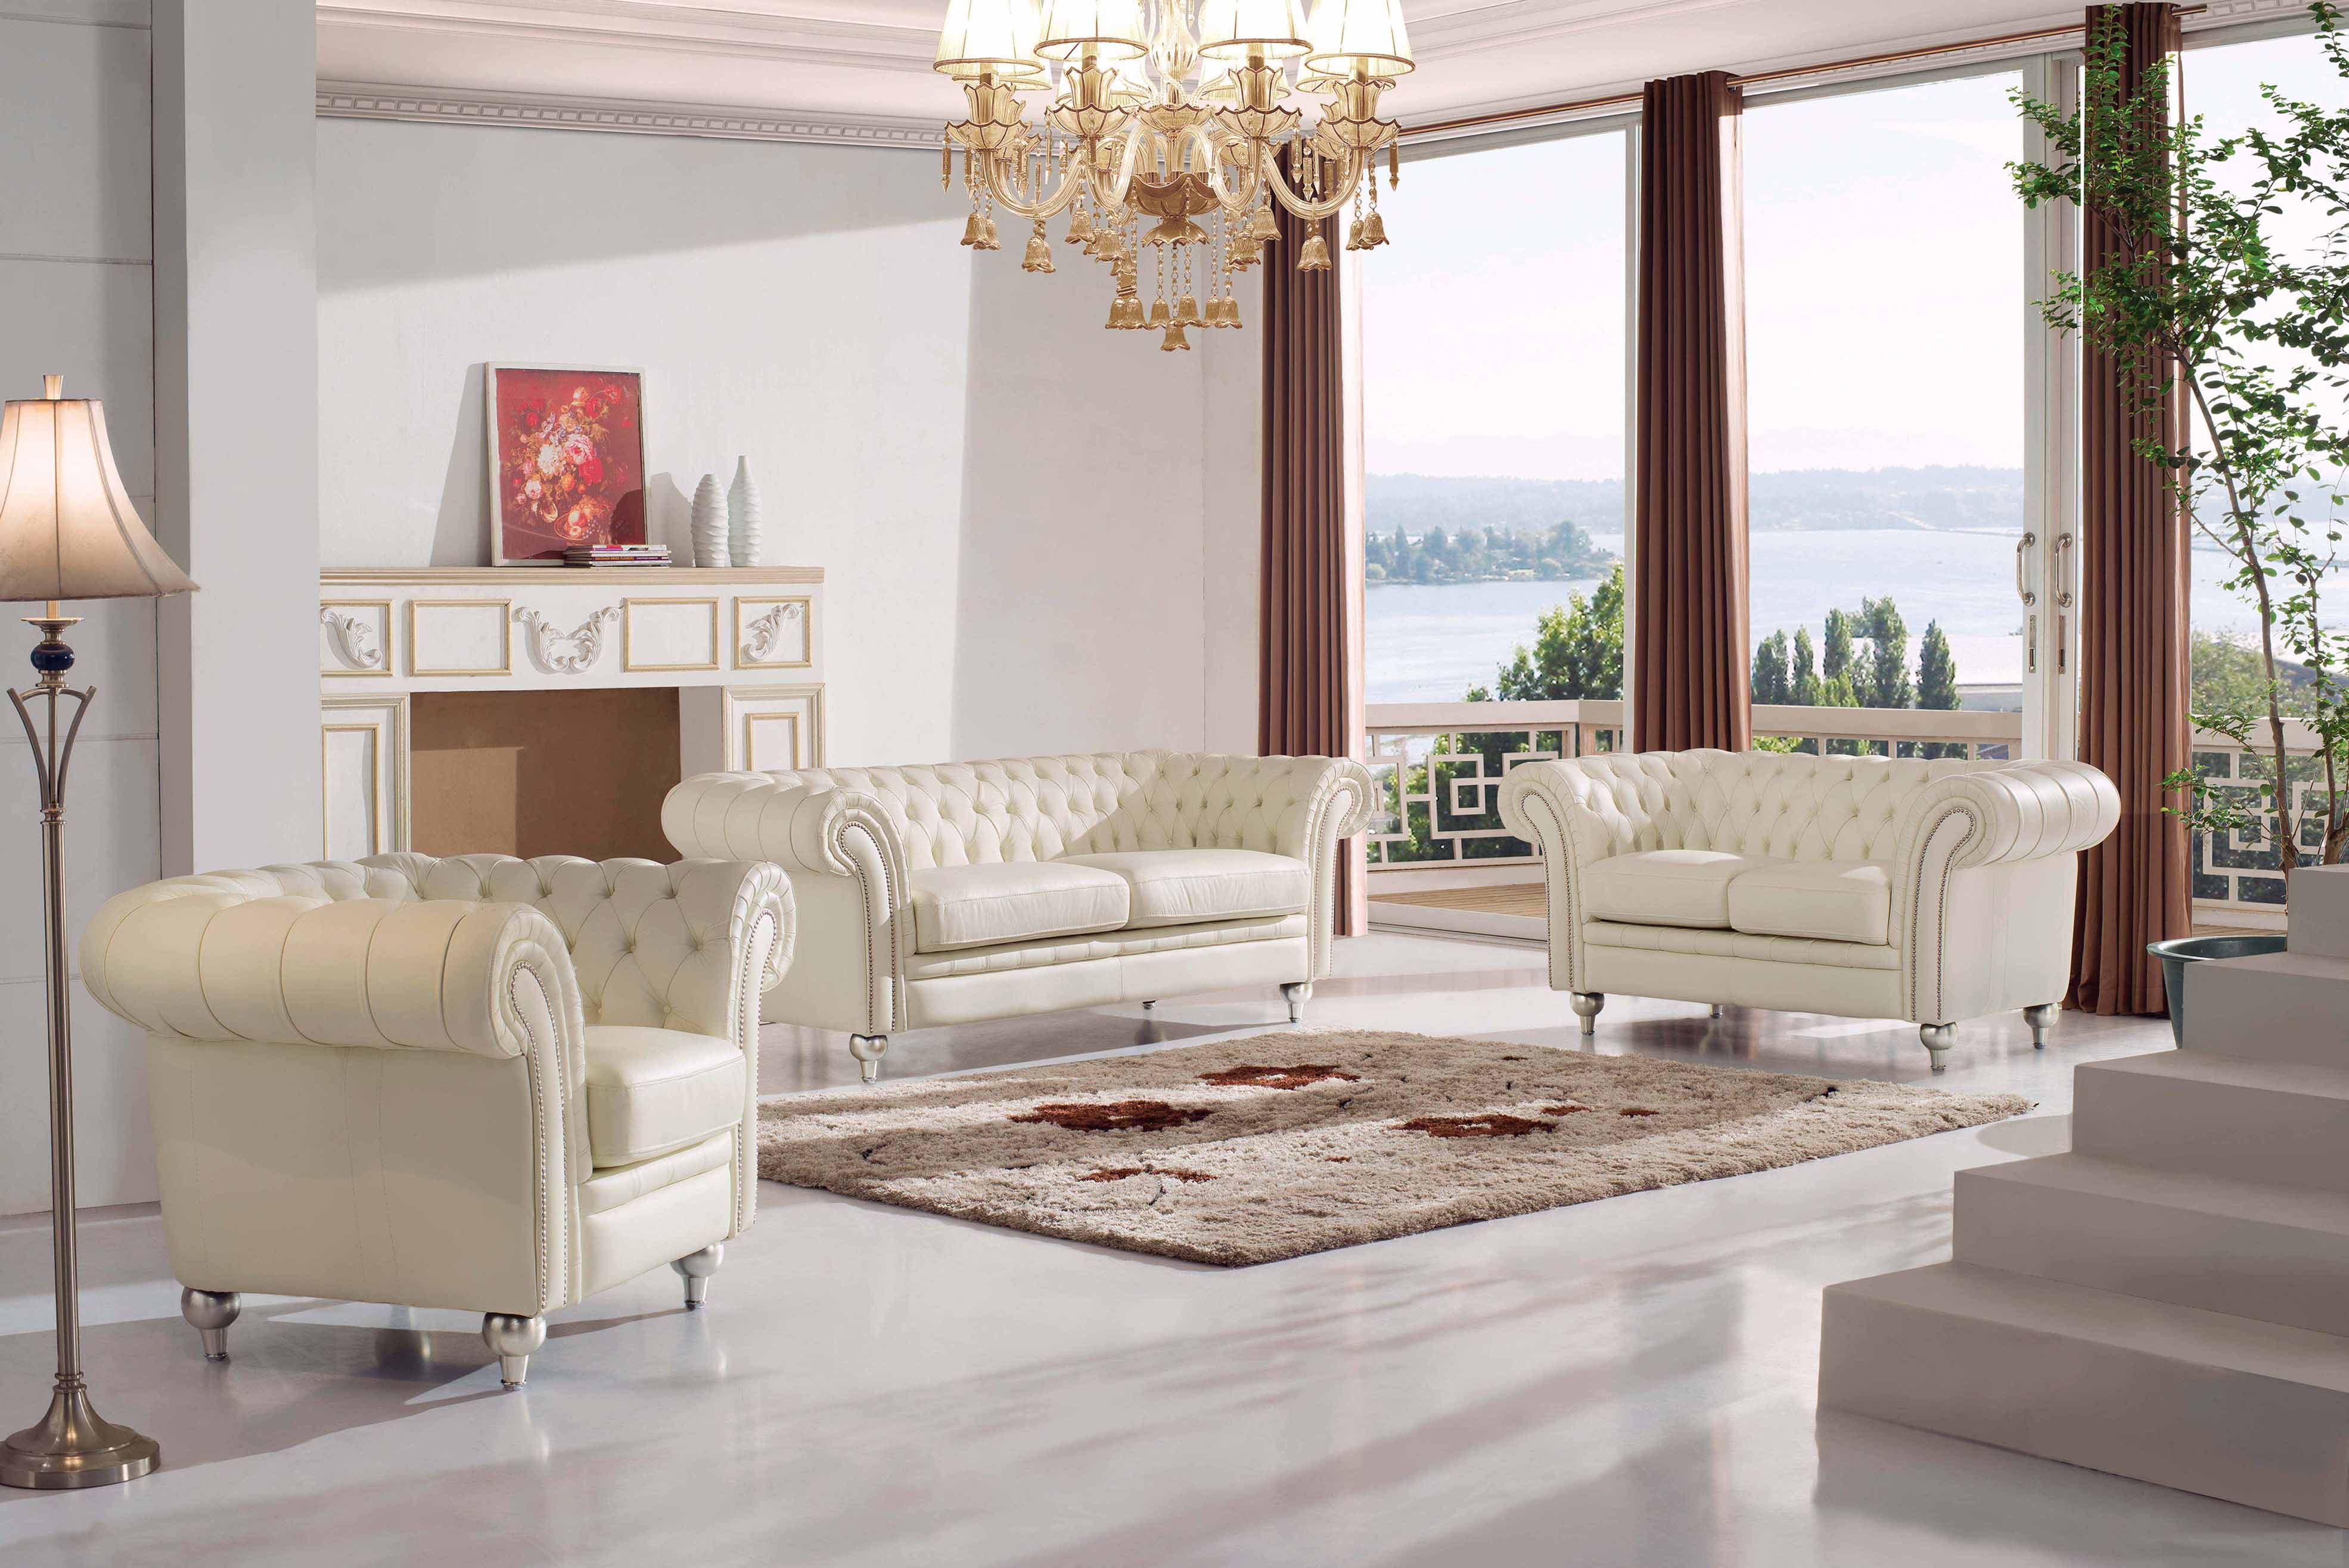 Brands FSH Massage Chairs 287 Living Room